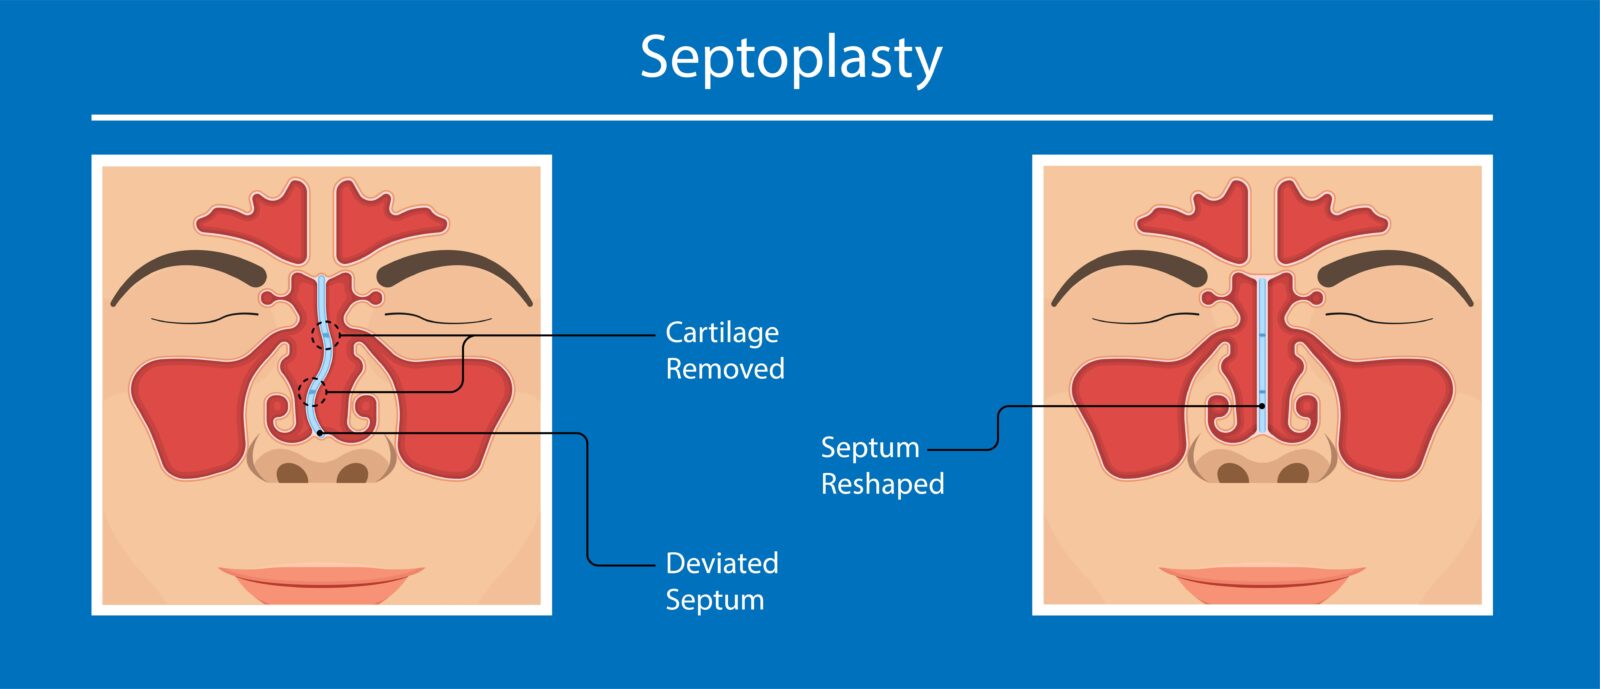 Septoplasty procedure